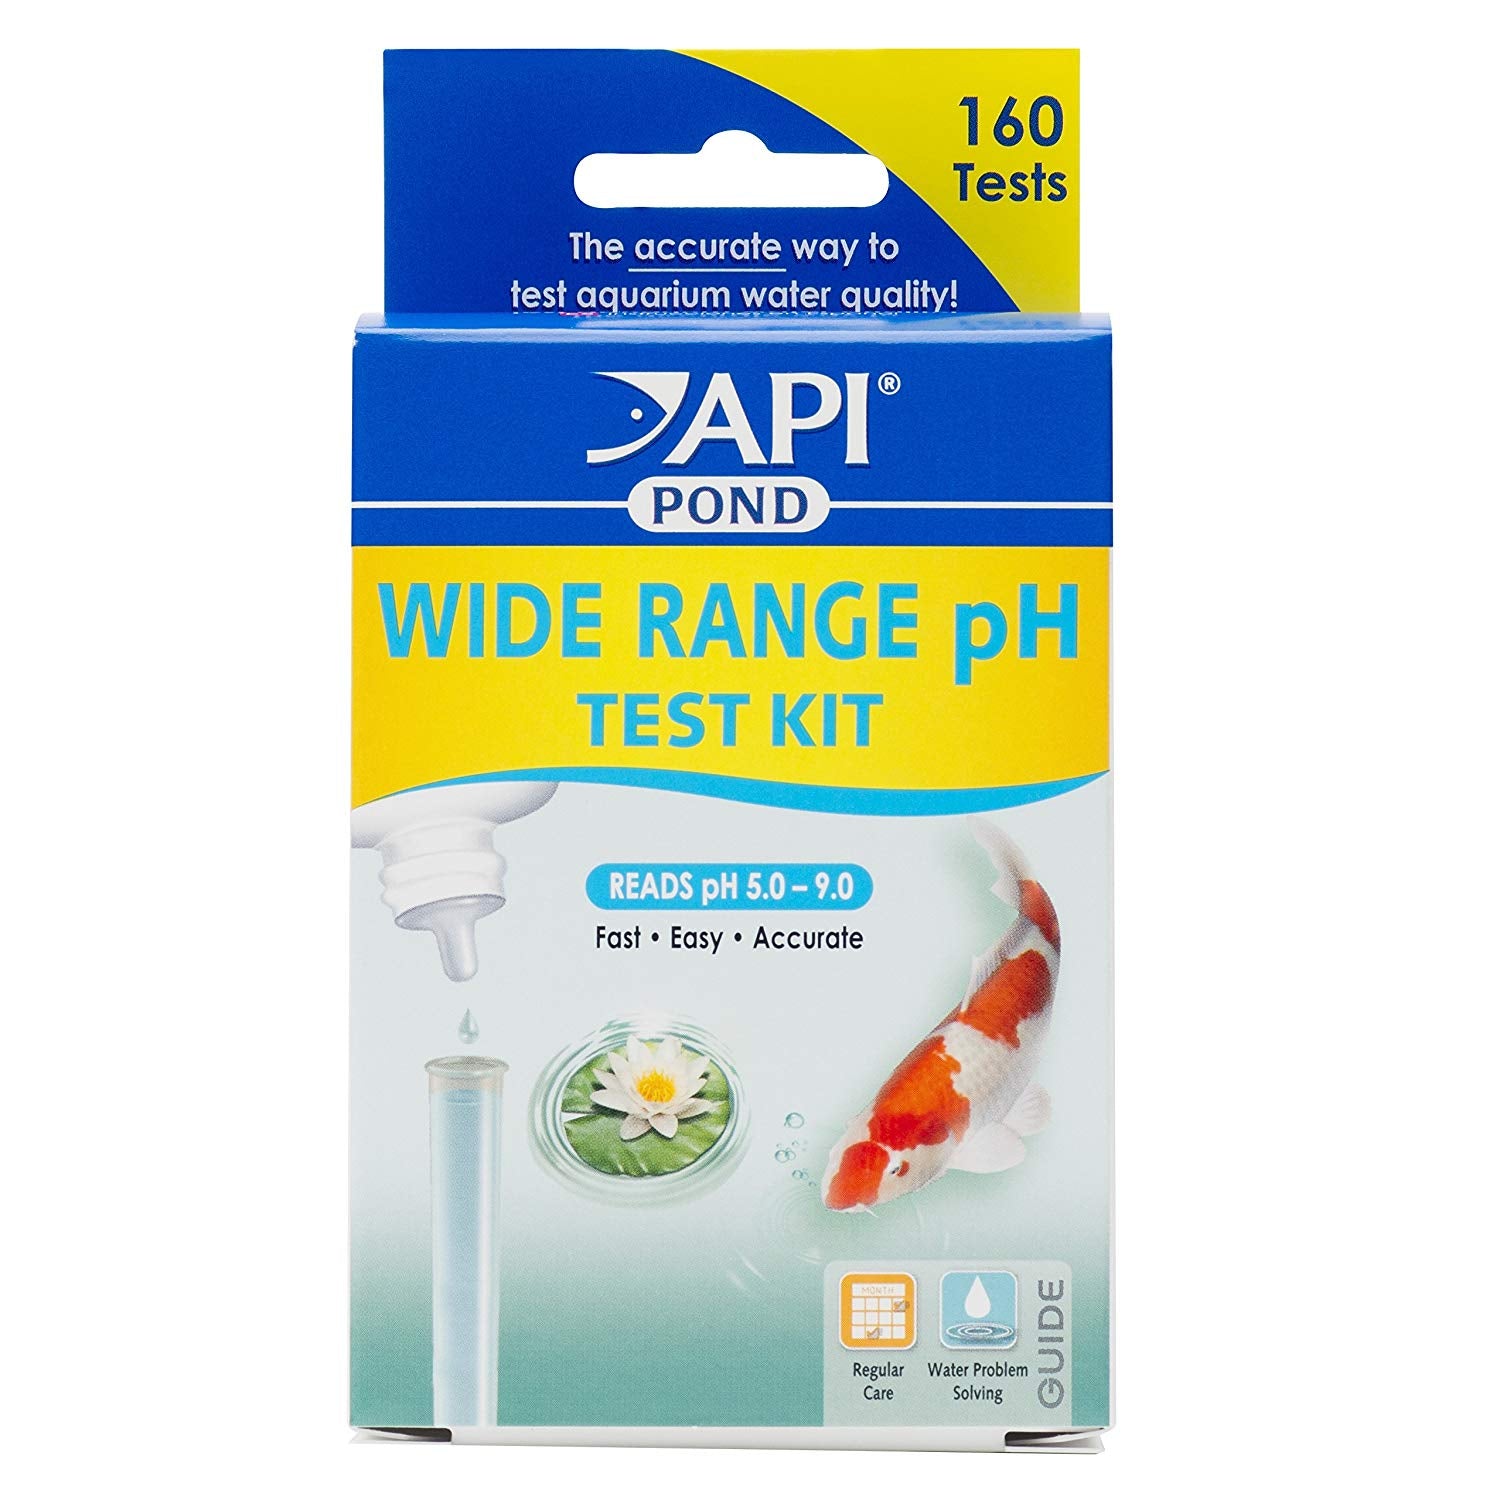 API Pond Wide Range pH Test Kit Reads pH 5.0 to 9.0